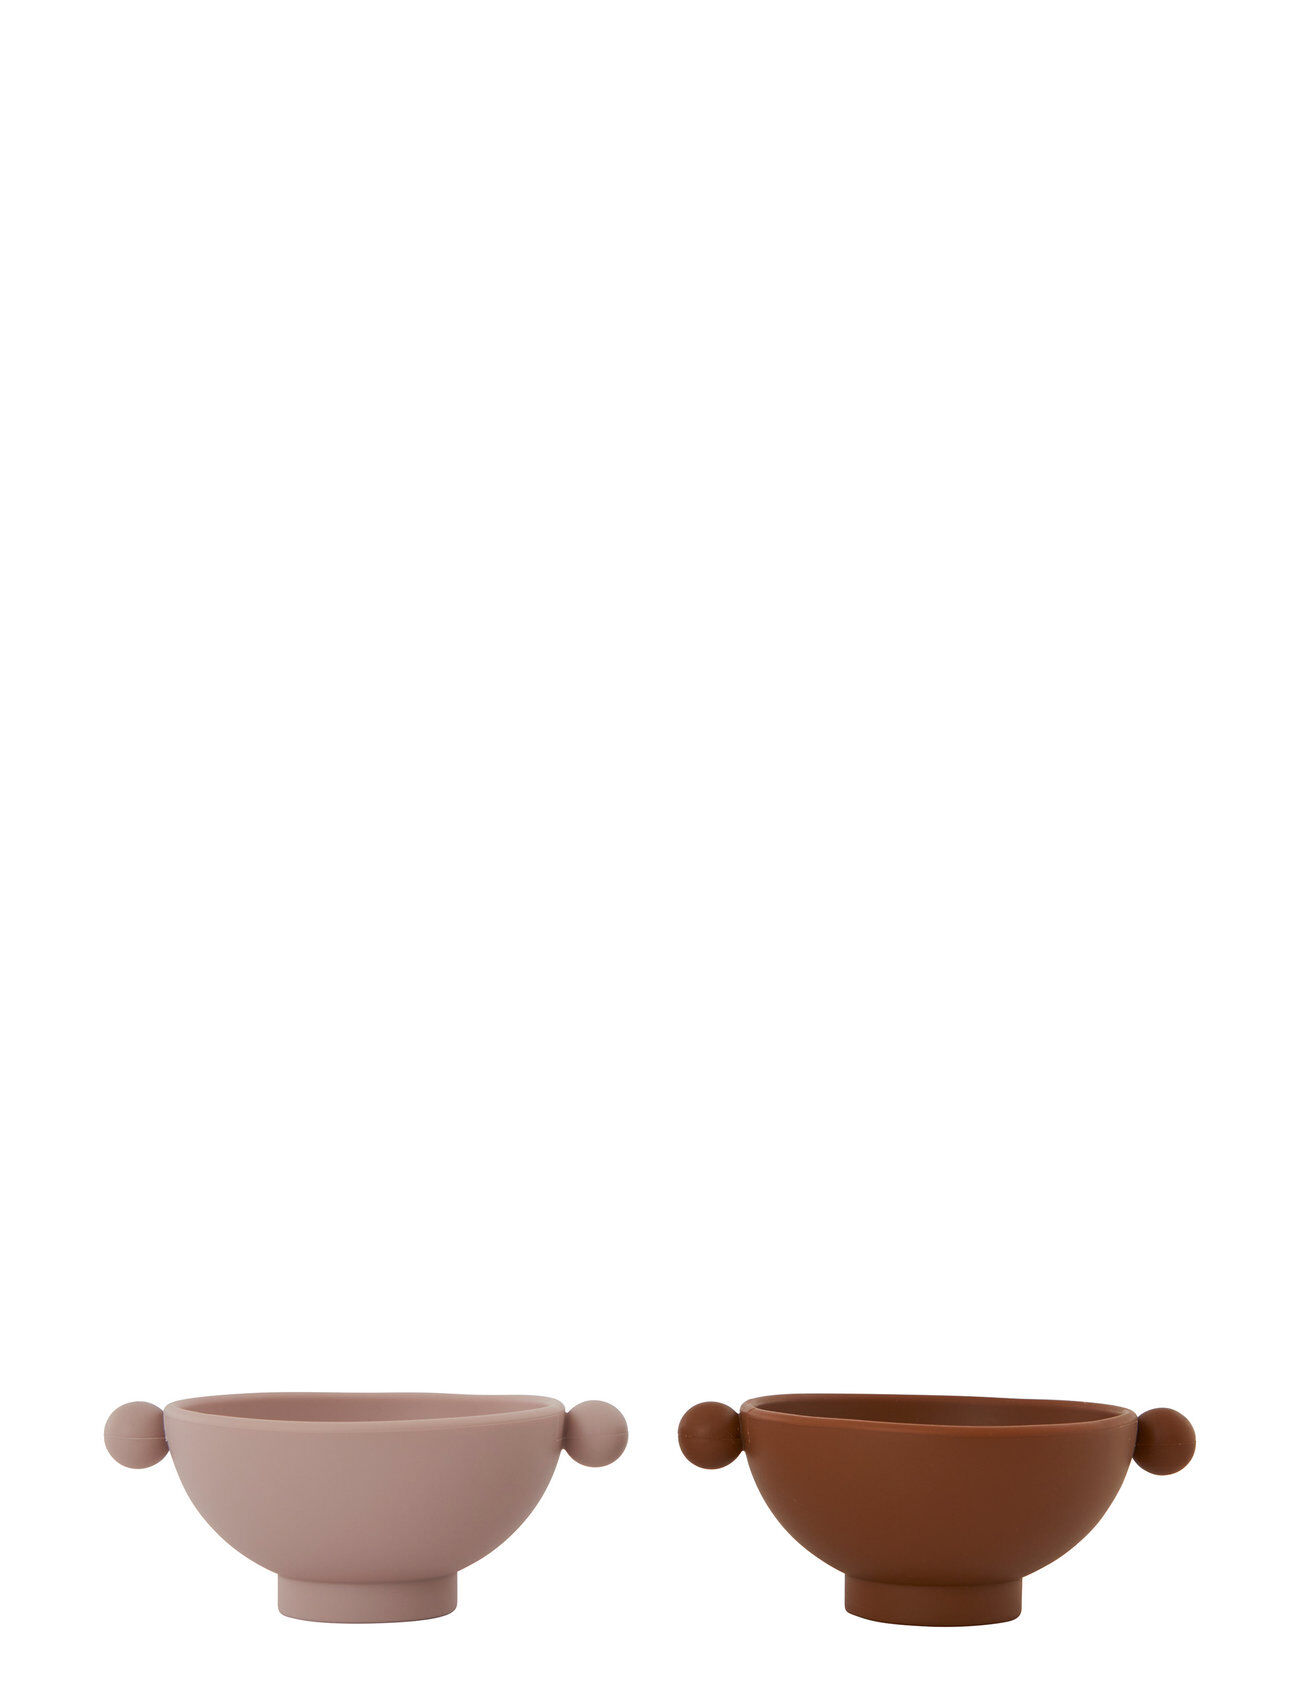 OYOY Living Design Tiny Inka Bowl - Pack Of 2 Home Meal Time Plates & Bowls Bowls Multi/mønstret OYOY Living Design